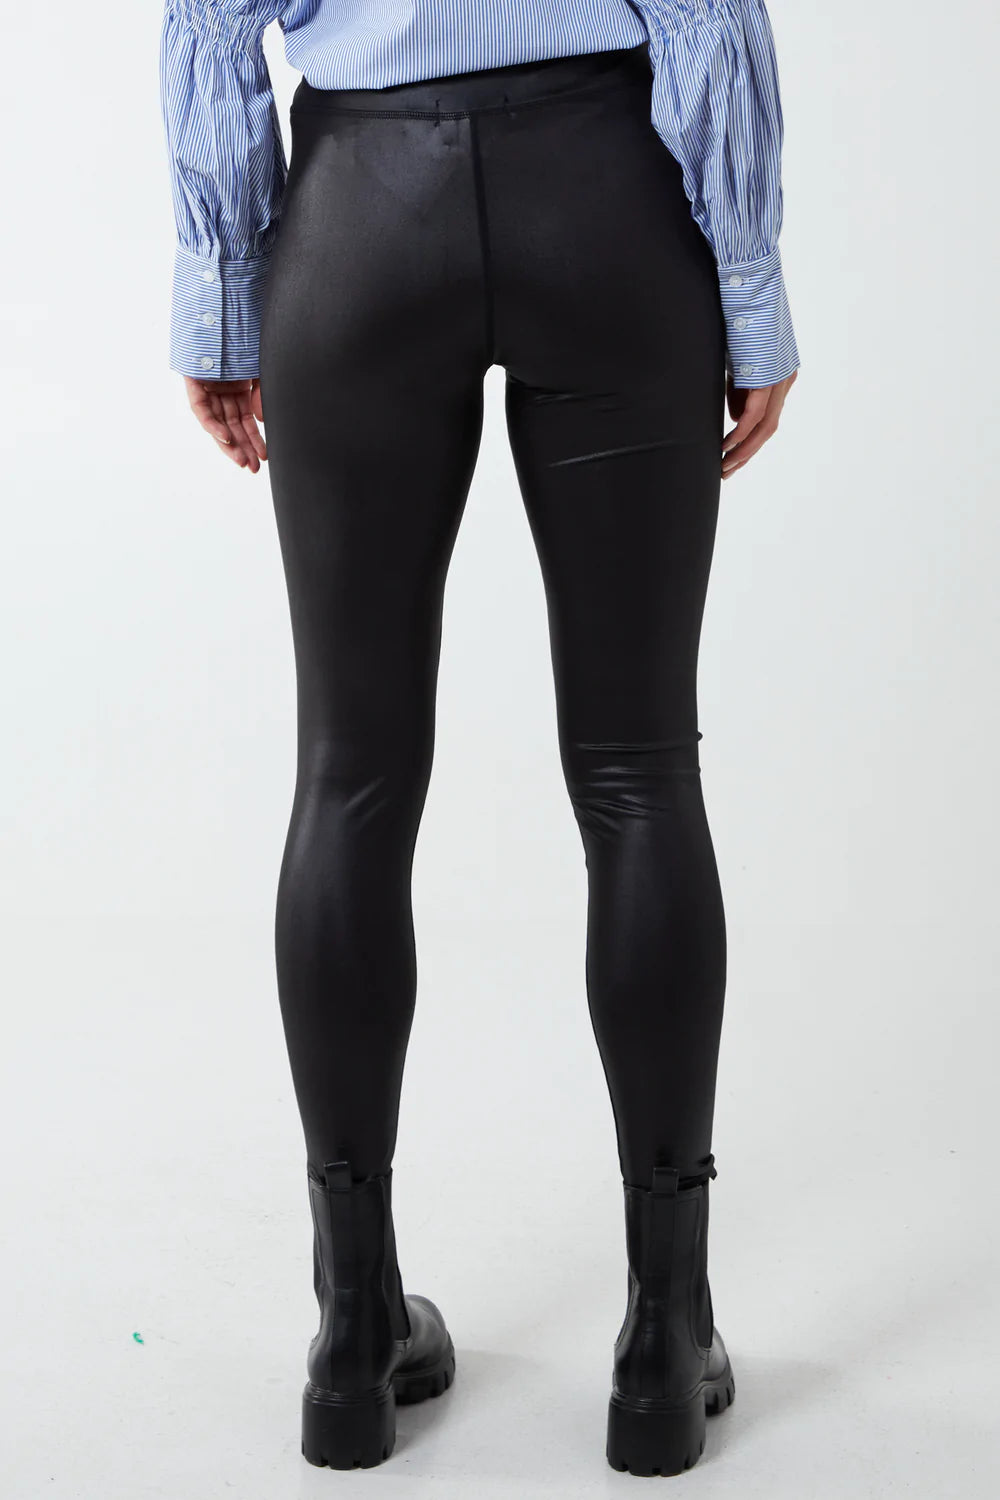 Wet look stretchy full length leggings in black